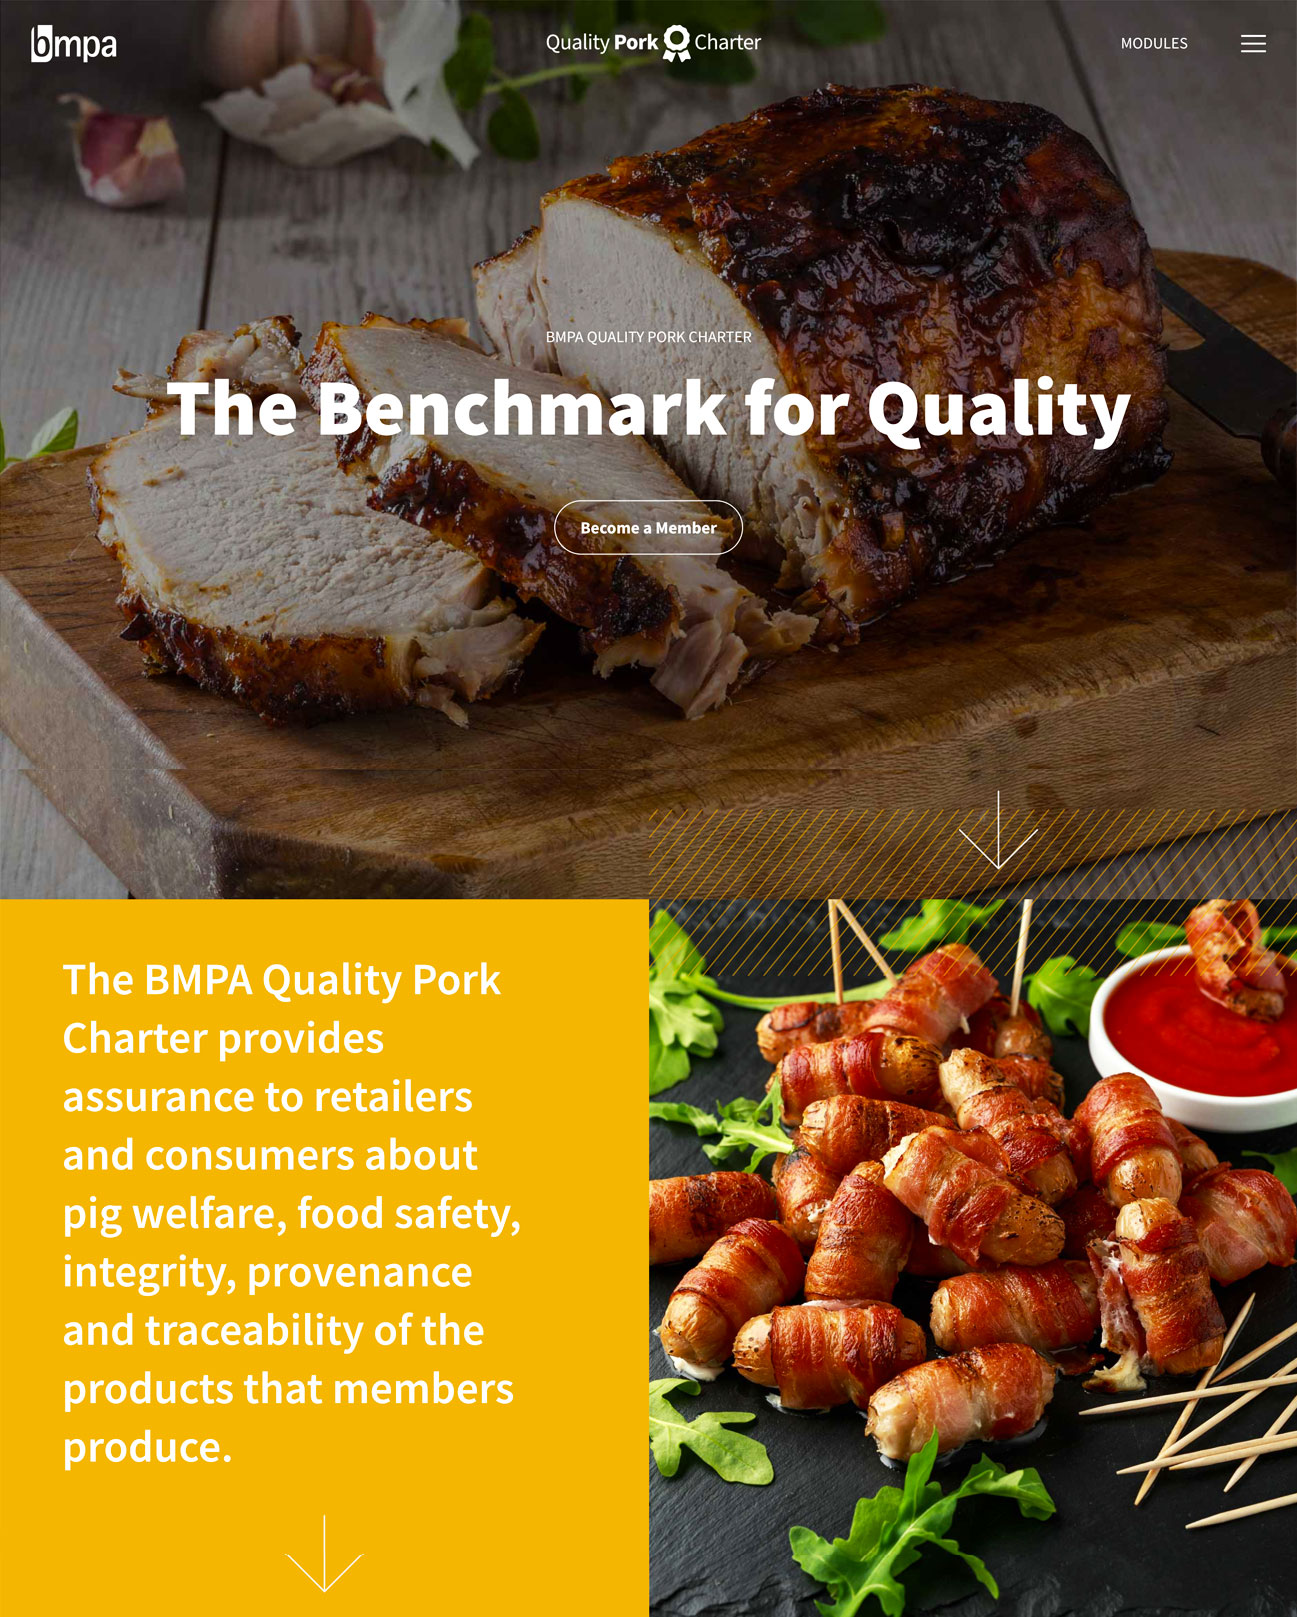 Quality Pork Charter home page